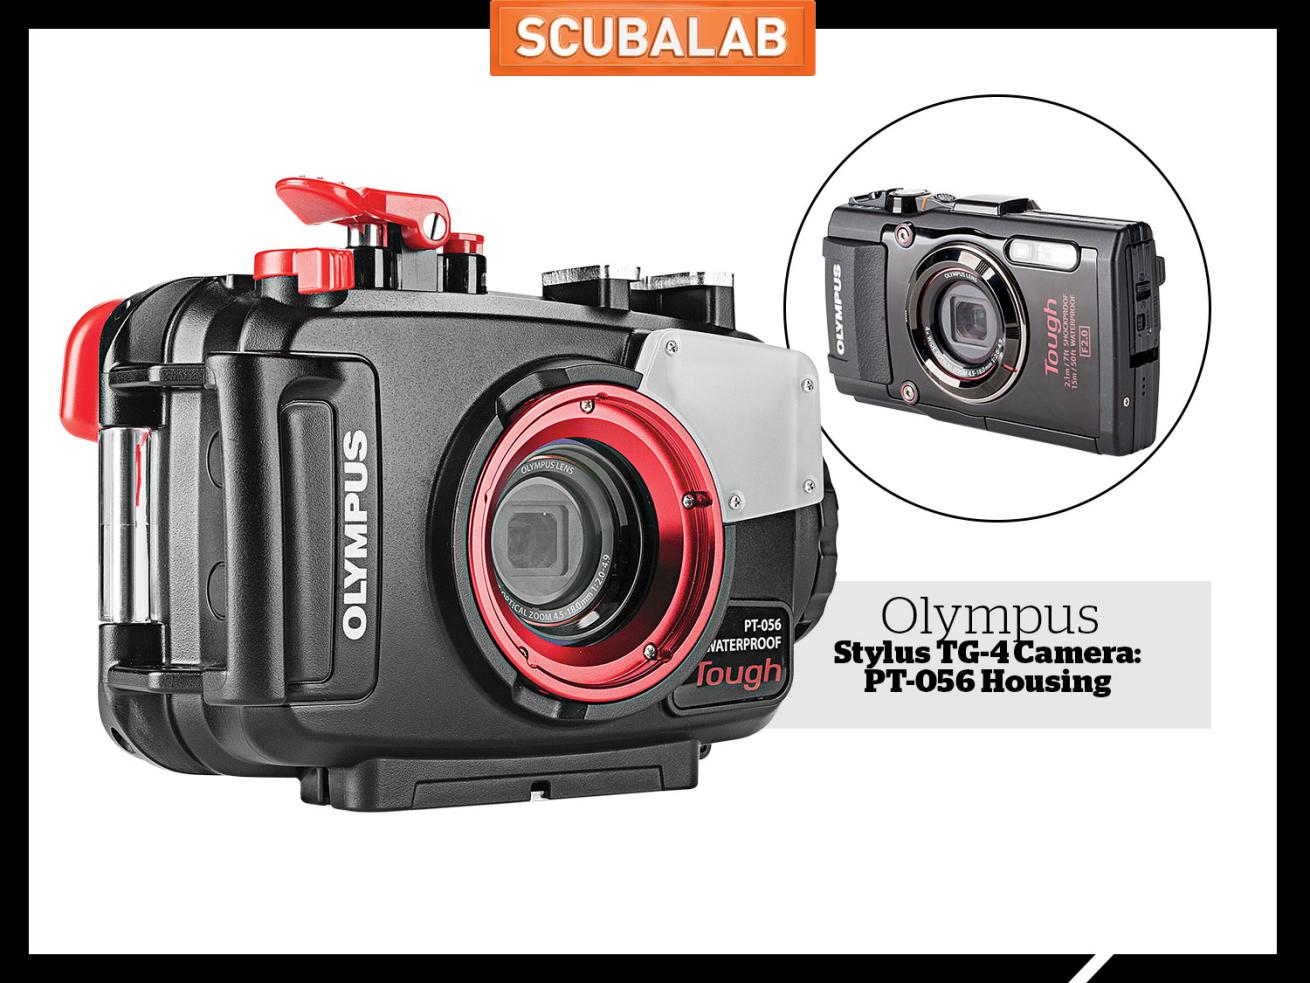 Olympus Stylus TG-4 camera and PT-056 underwater housing